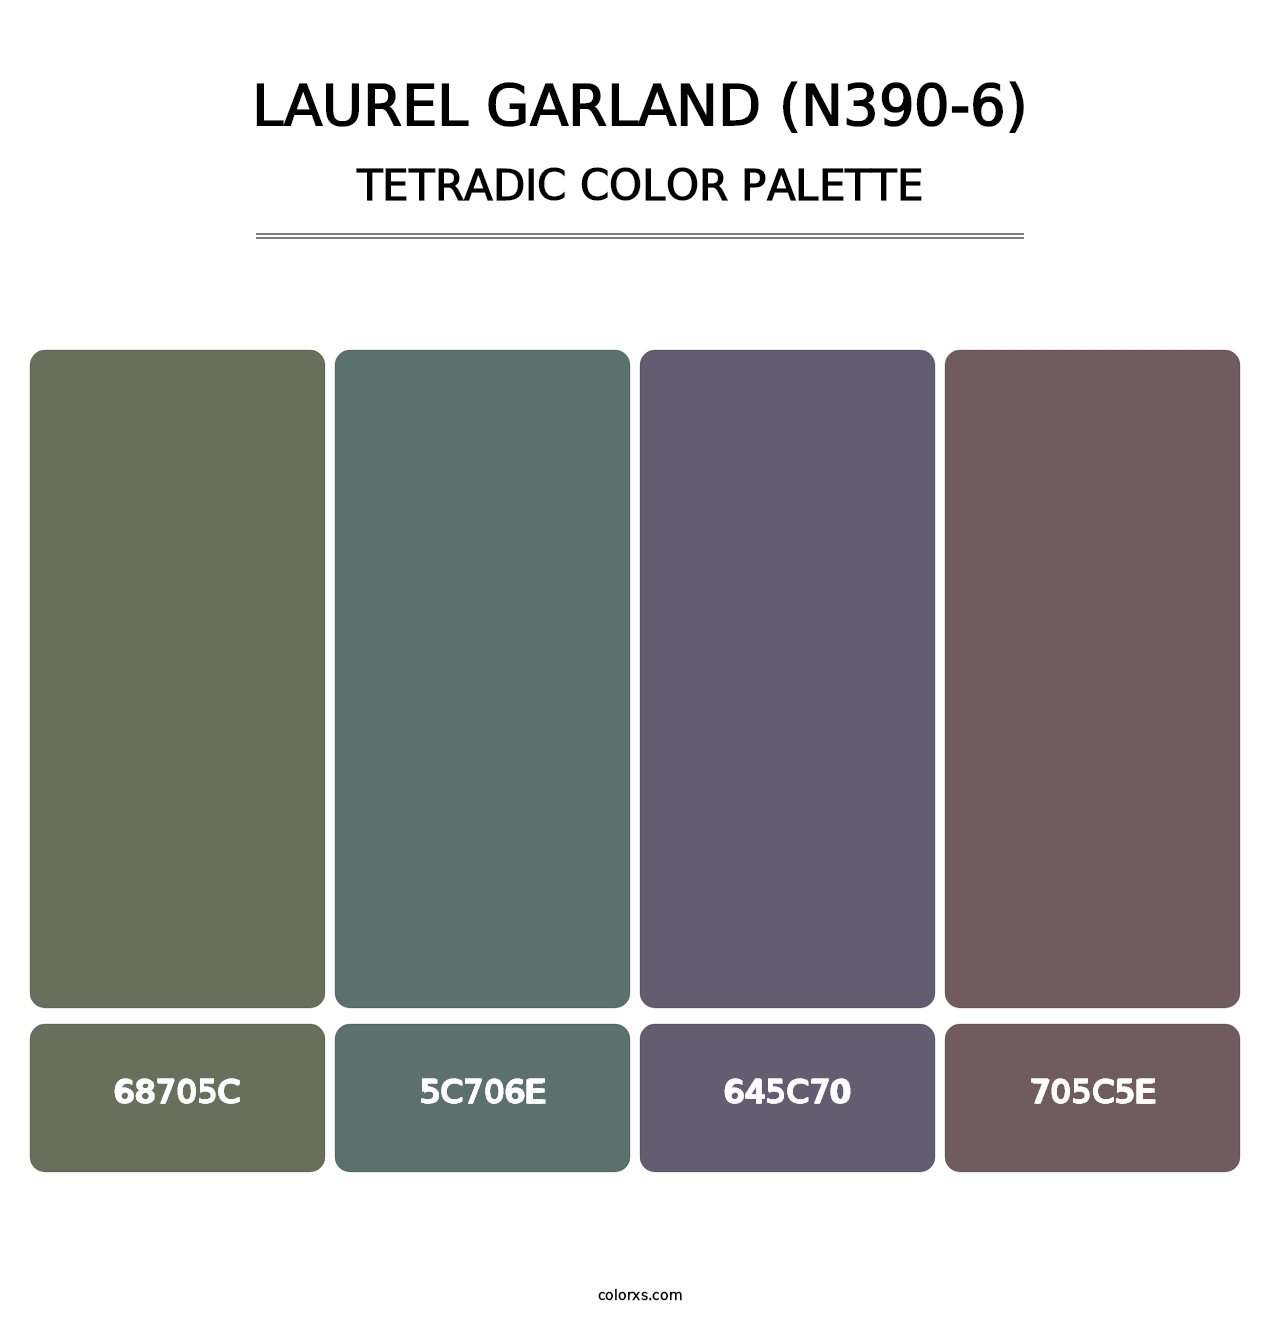 Laurel Garland (N390-6) - Tetradic Color Palette